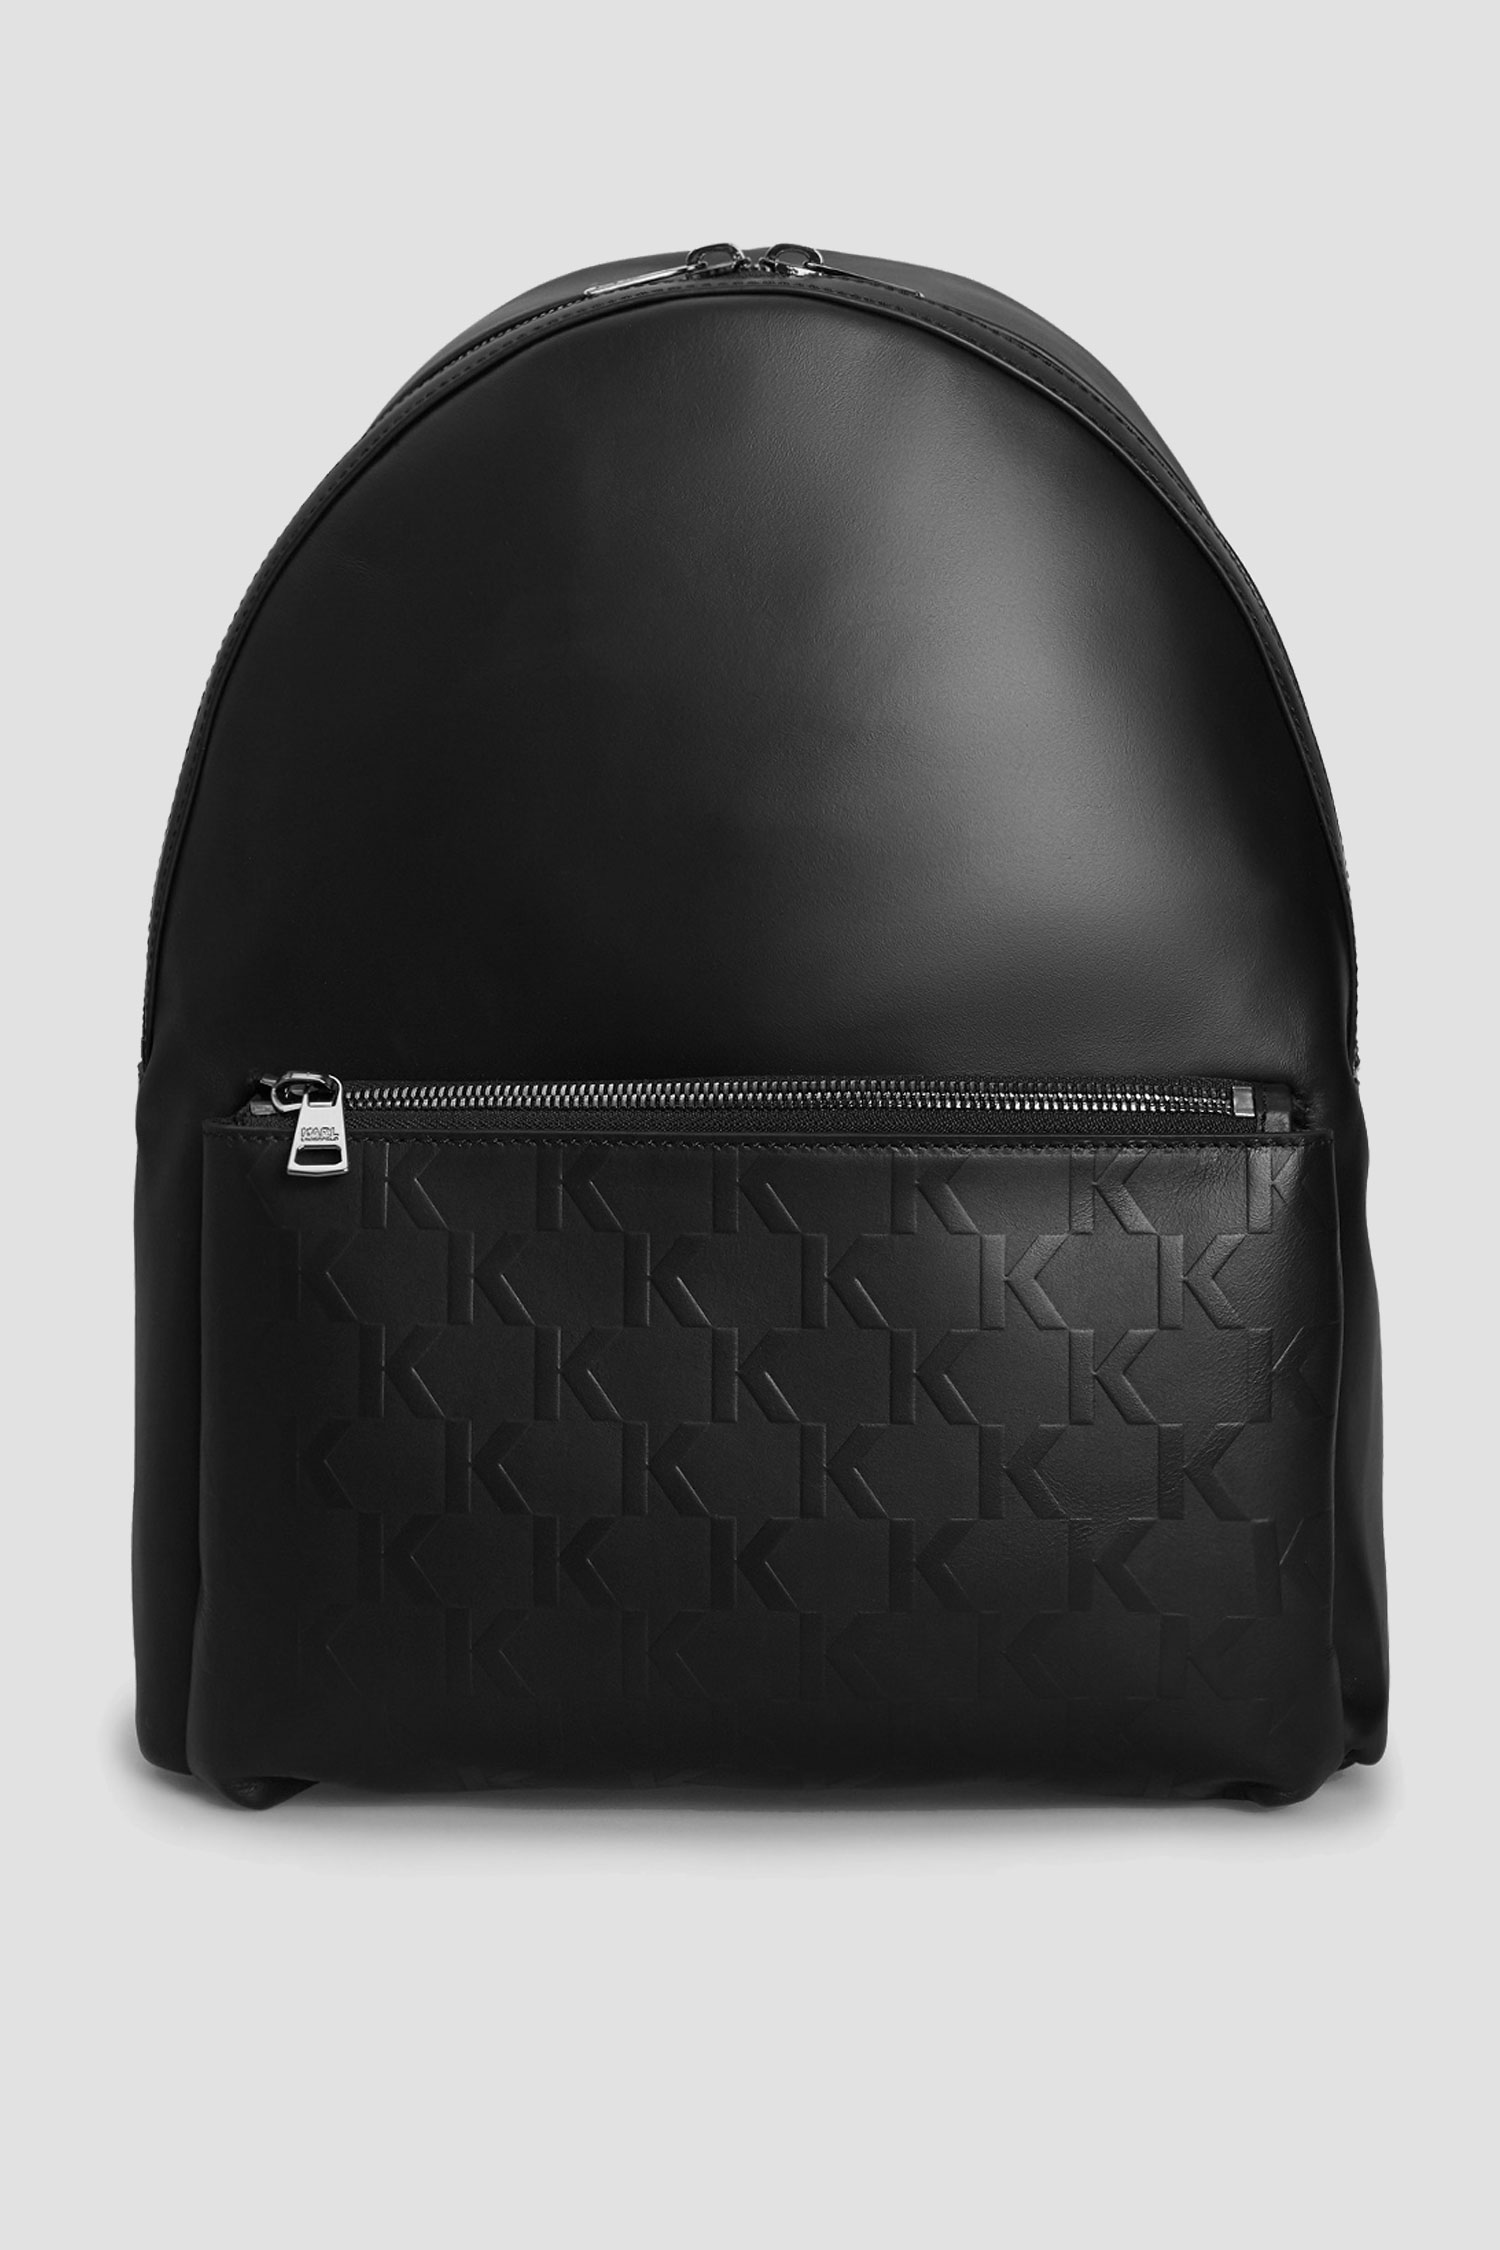 Черный кожаный рюкзак для парней Karl Lagerfeld 511453.815901;990